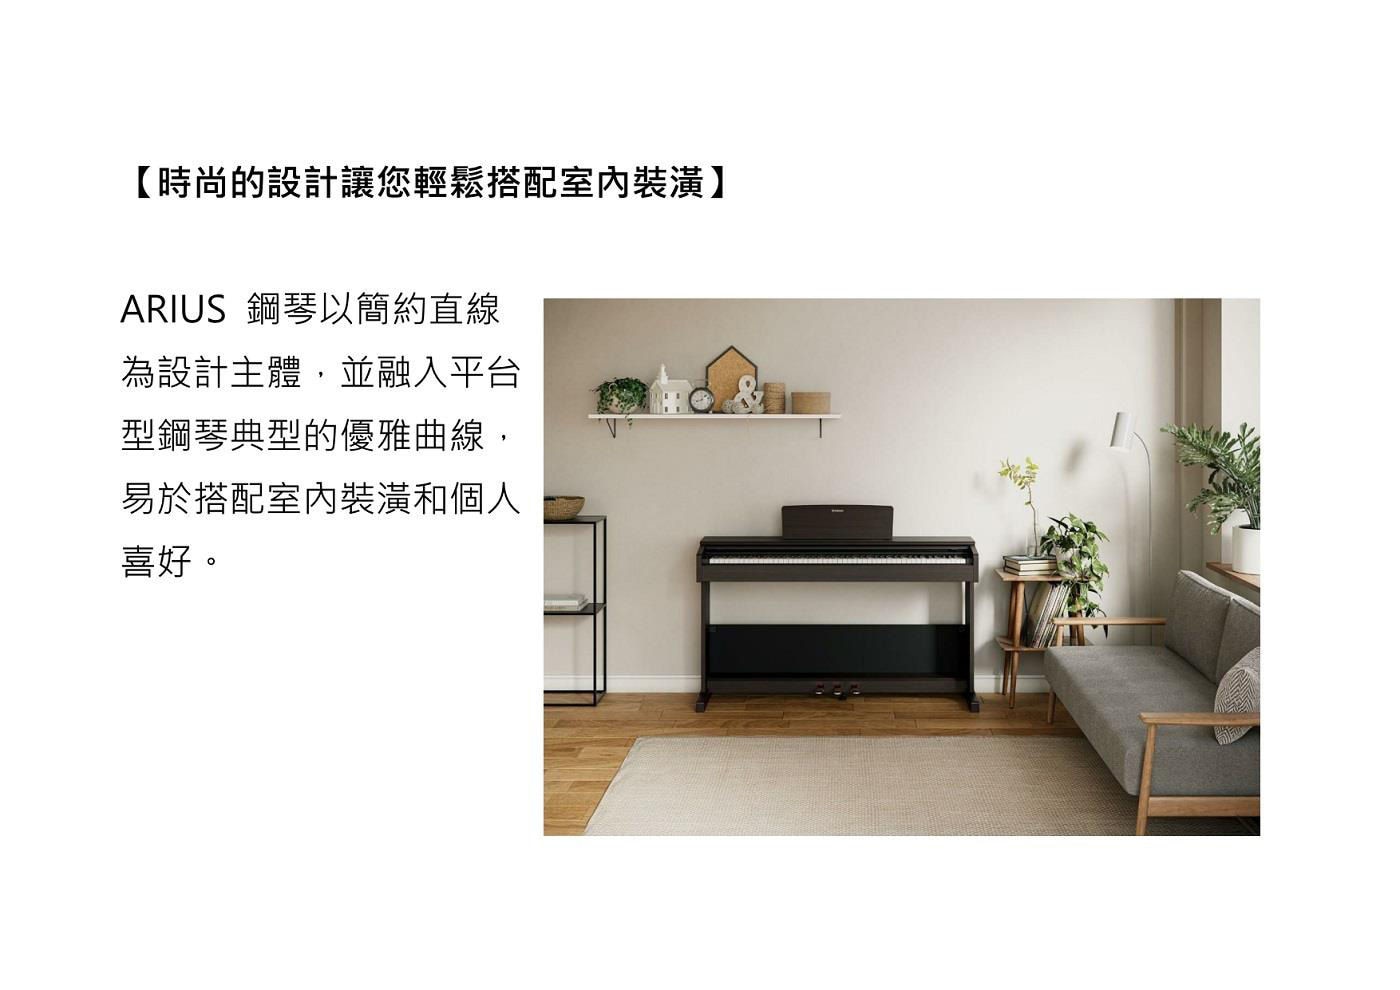 Yamaha Arius 數位鋼琴 深玫瑰木色 YDP105R 時尚設計讓您輕鬆搭配室內裝潢